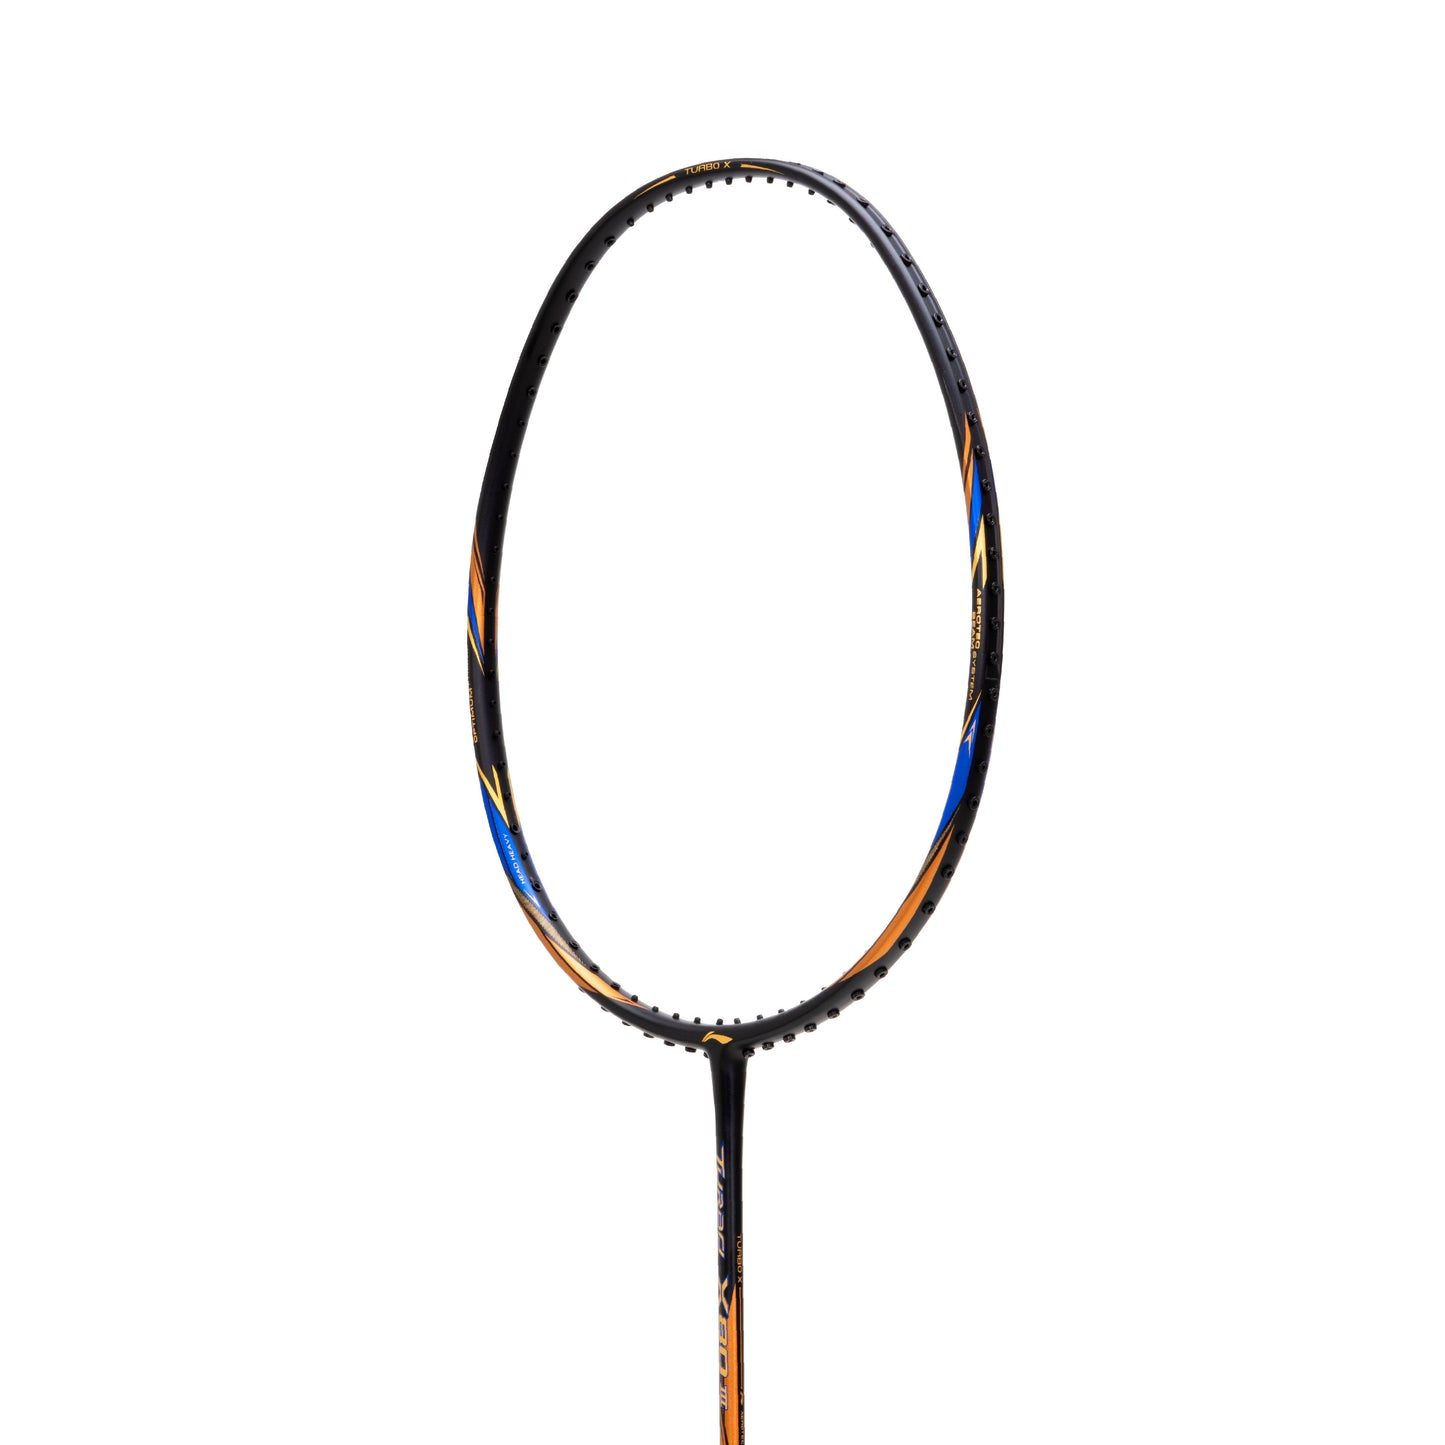 Li-Ning Turbo X 80 III (Black/Gold) Badminton Racket